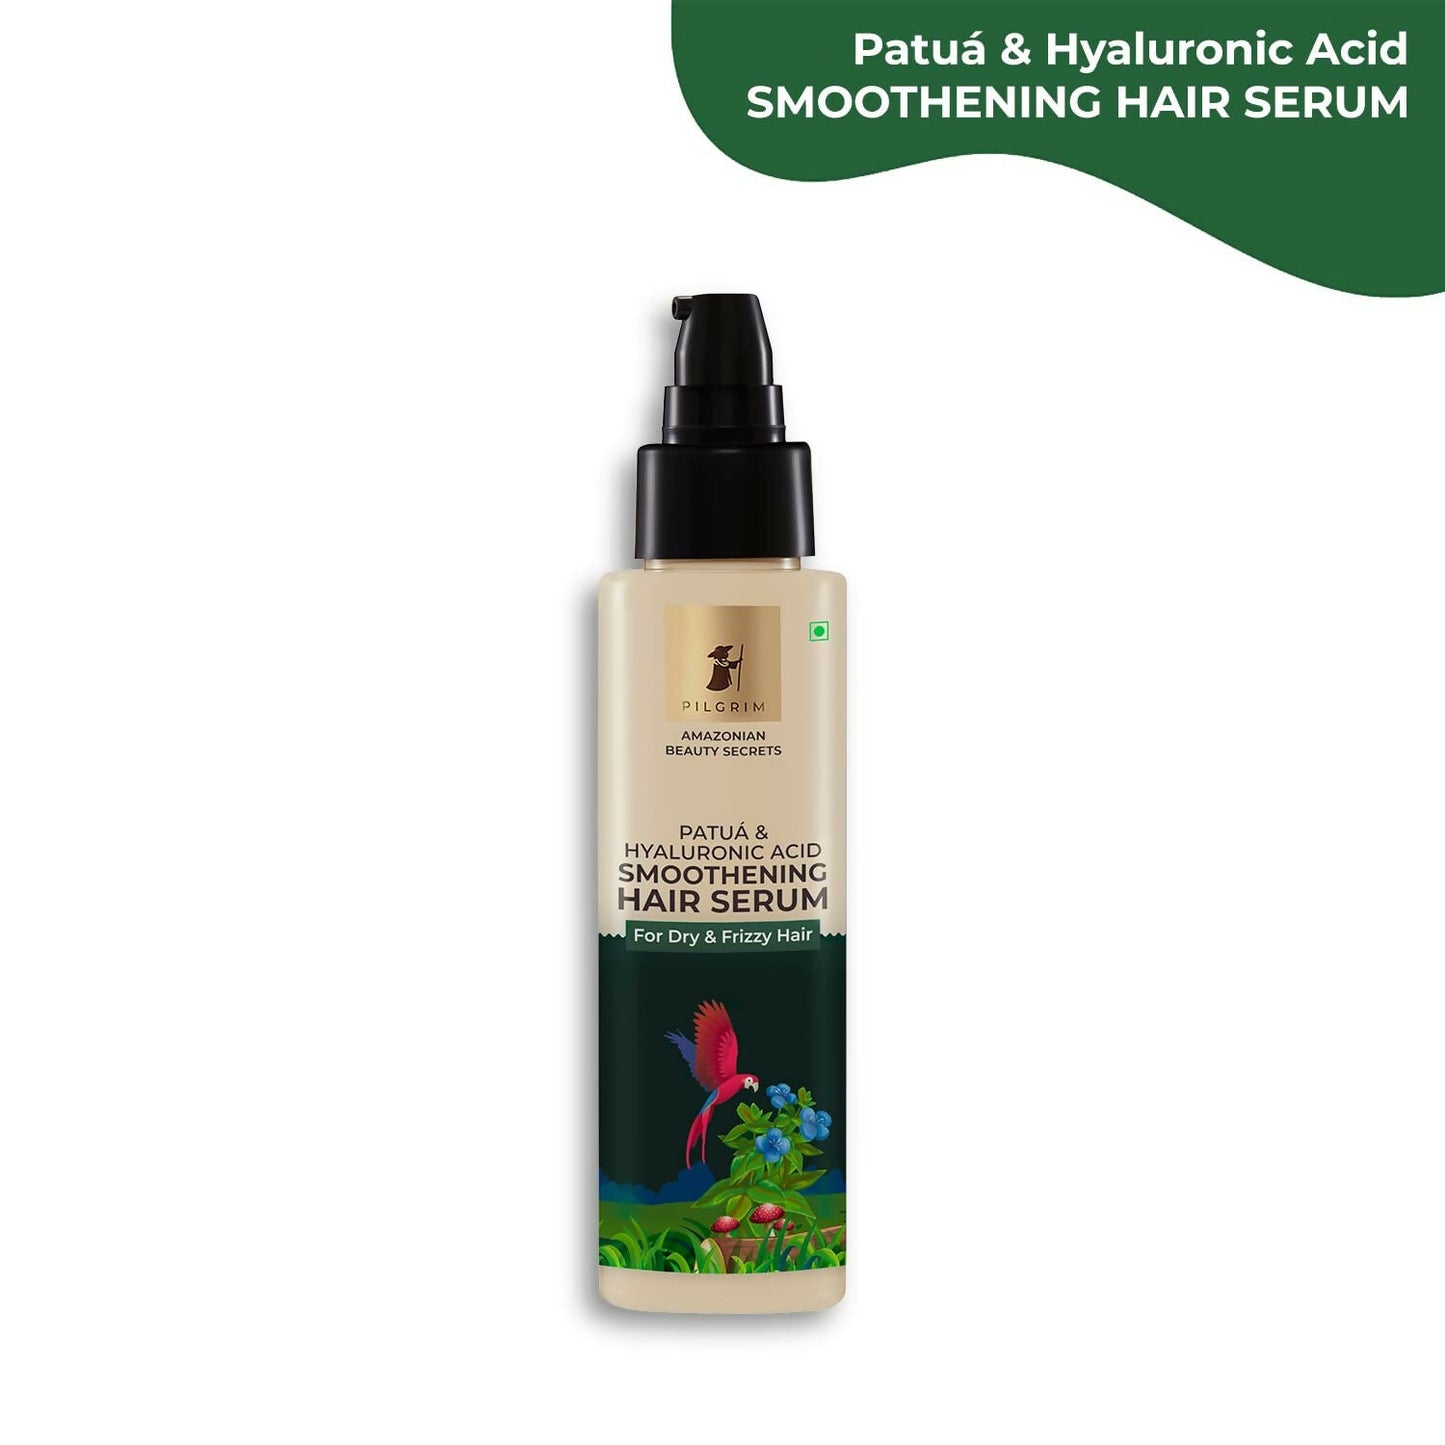 Pilgrim Amazonian Patu?? & Hyaluronic Acid Smoothening Hair Serum For Dry & Frizzy Hair, For Hair Smoothening